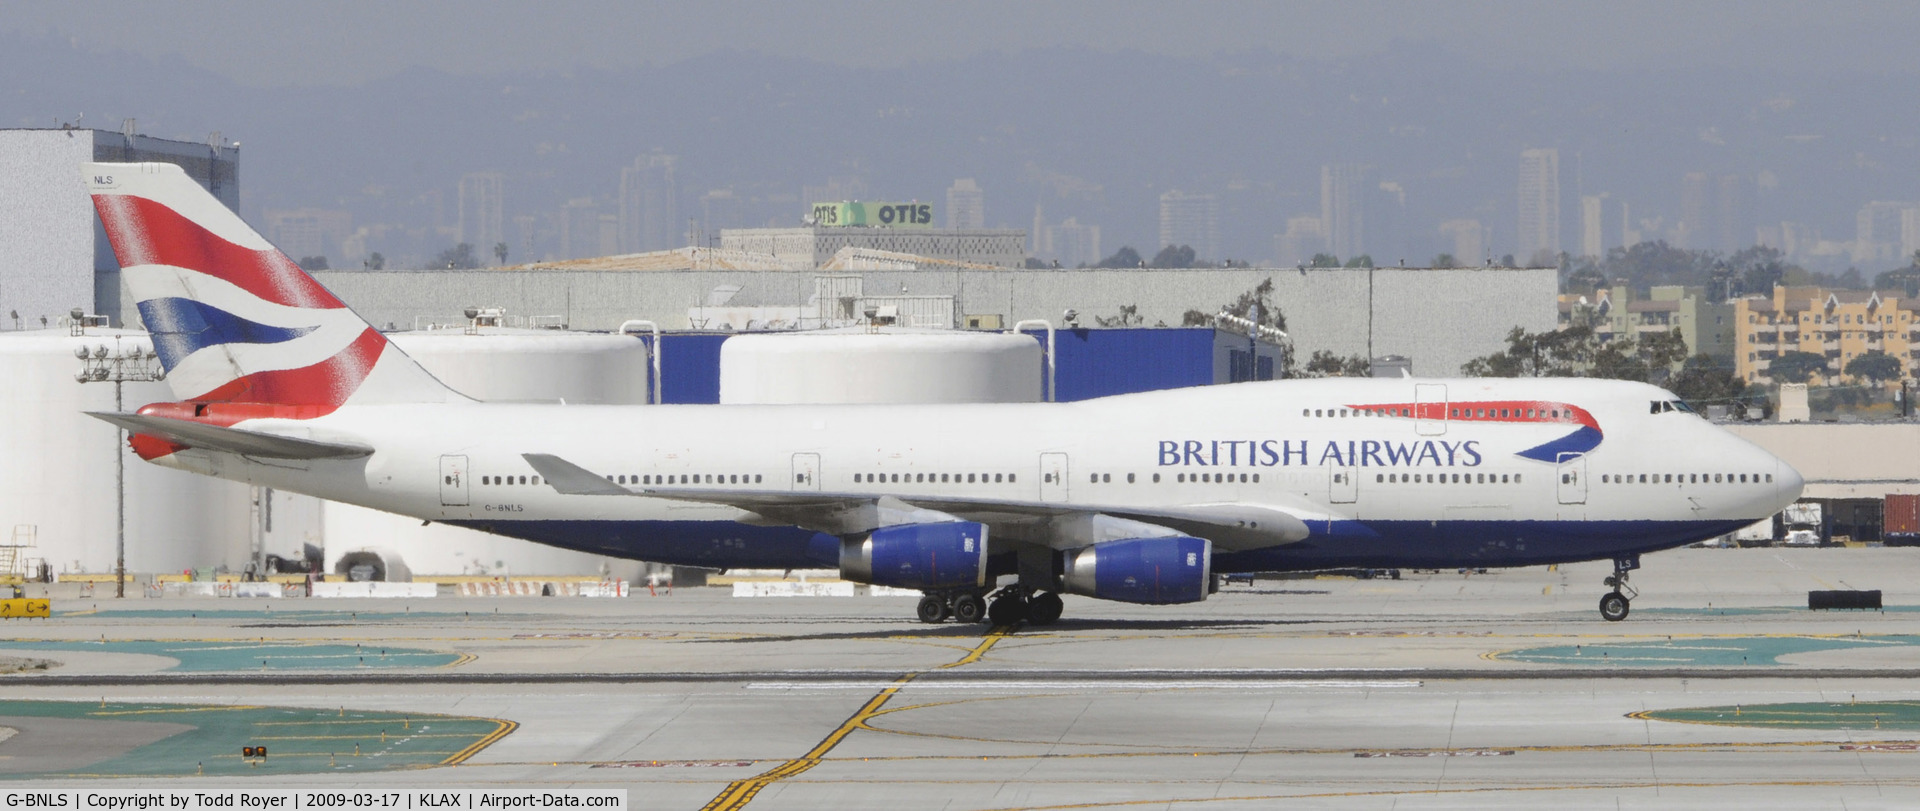 G-BNLS, 1991 Boeing 747-436 C/N 24629, Taxi to gate